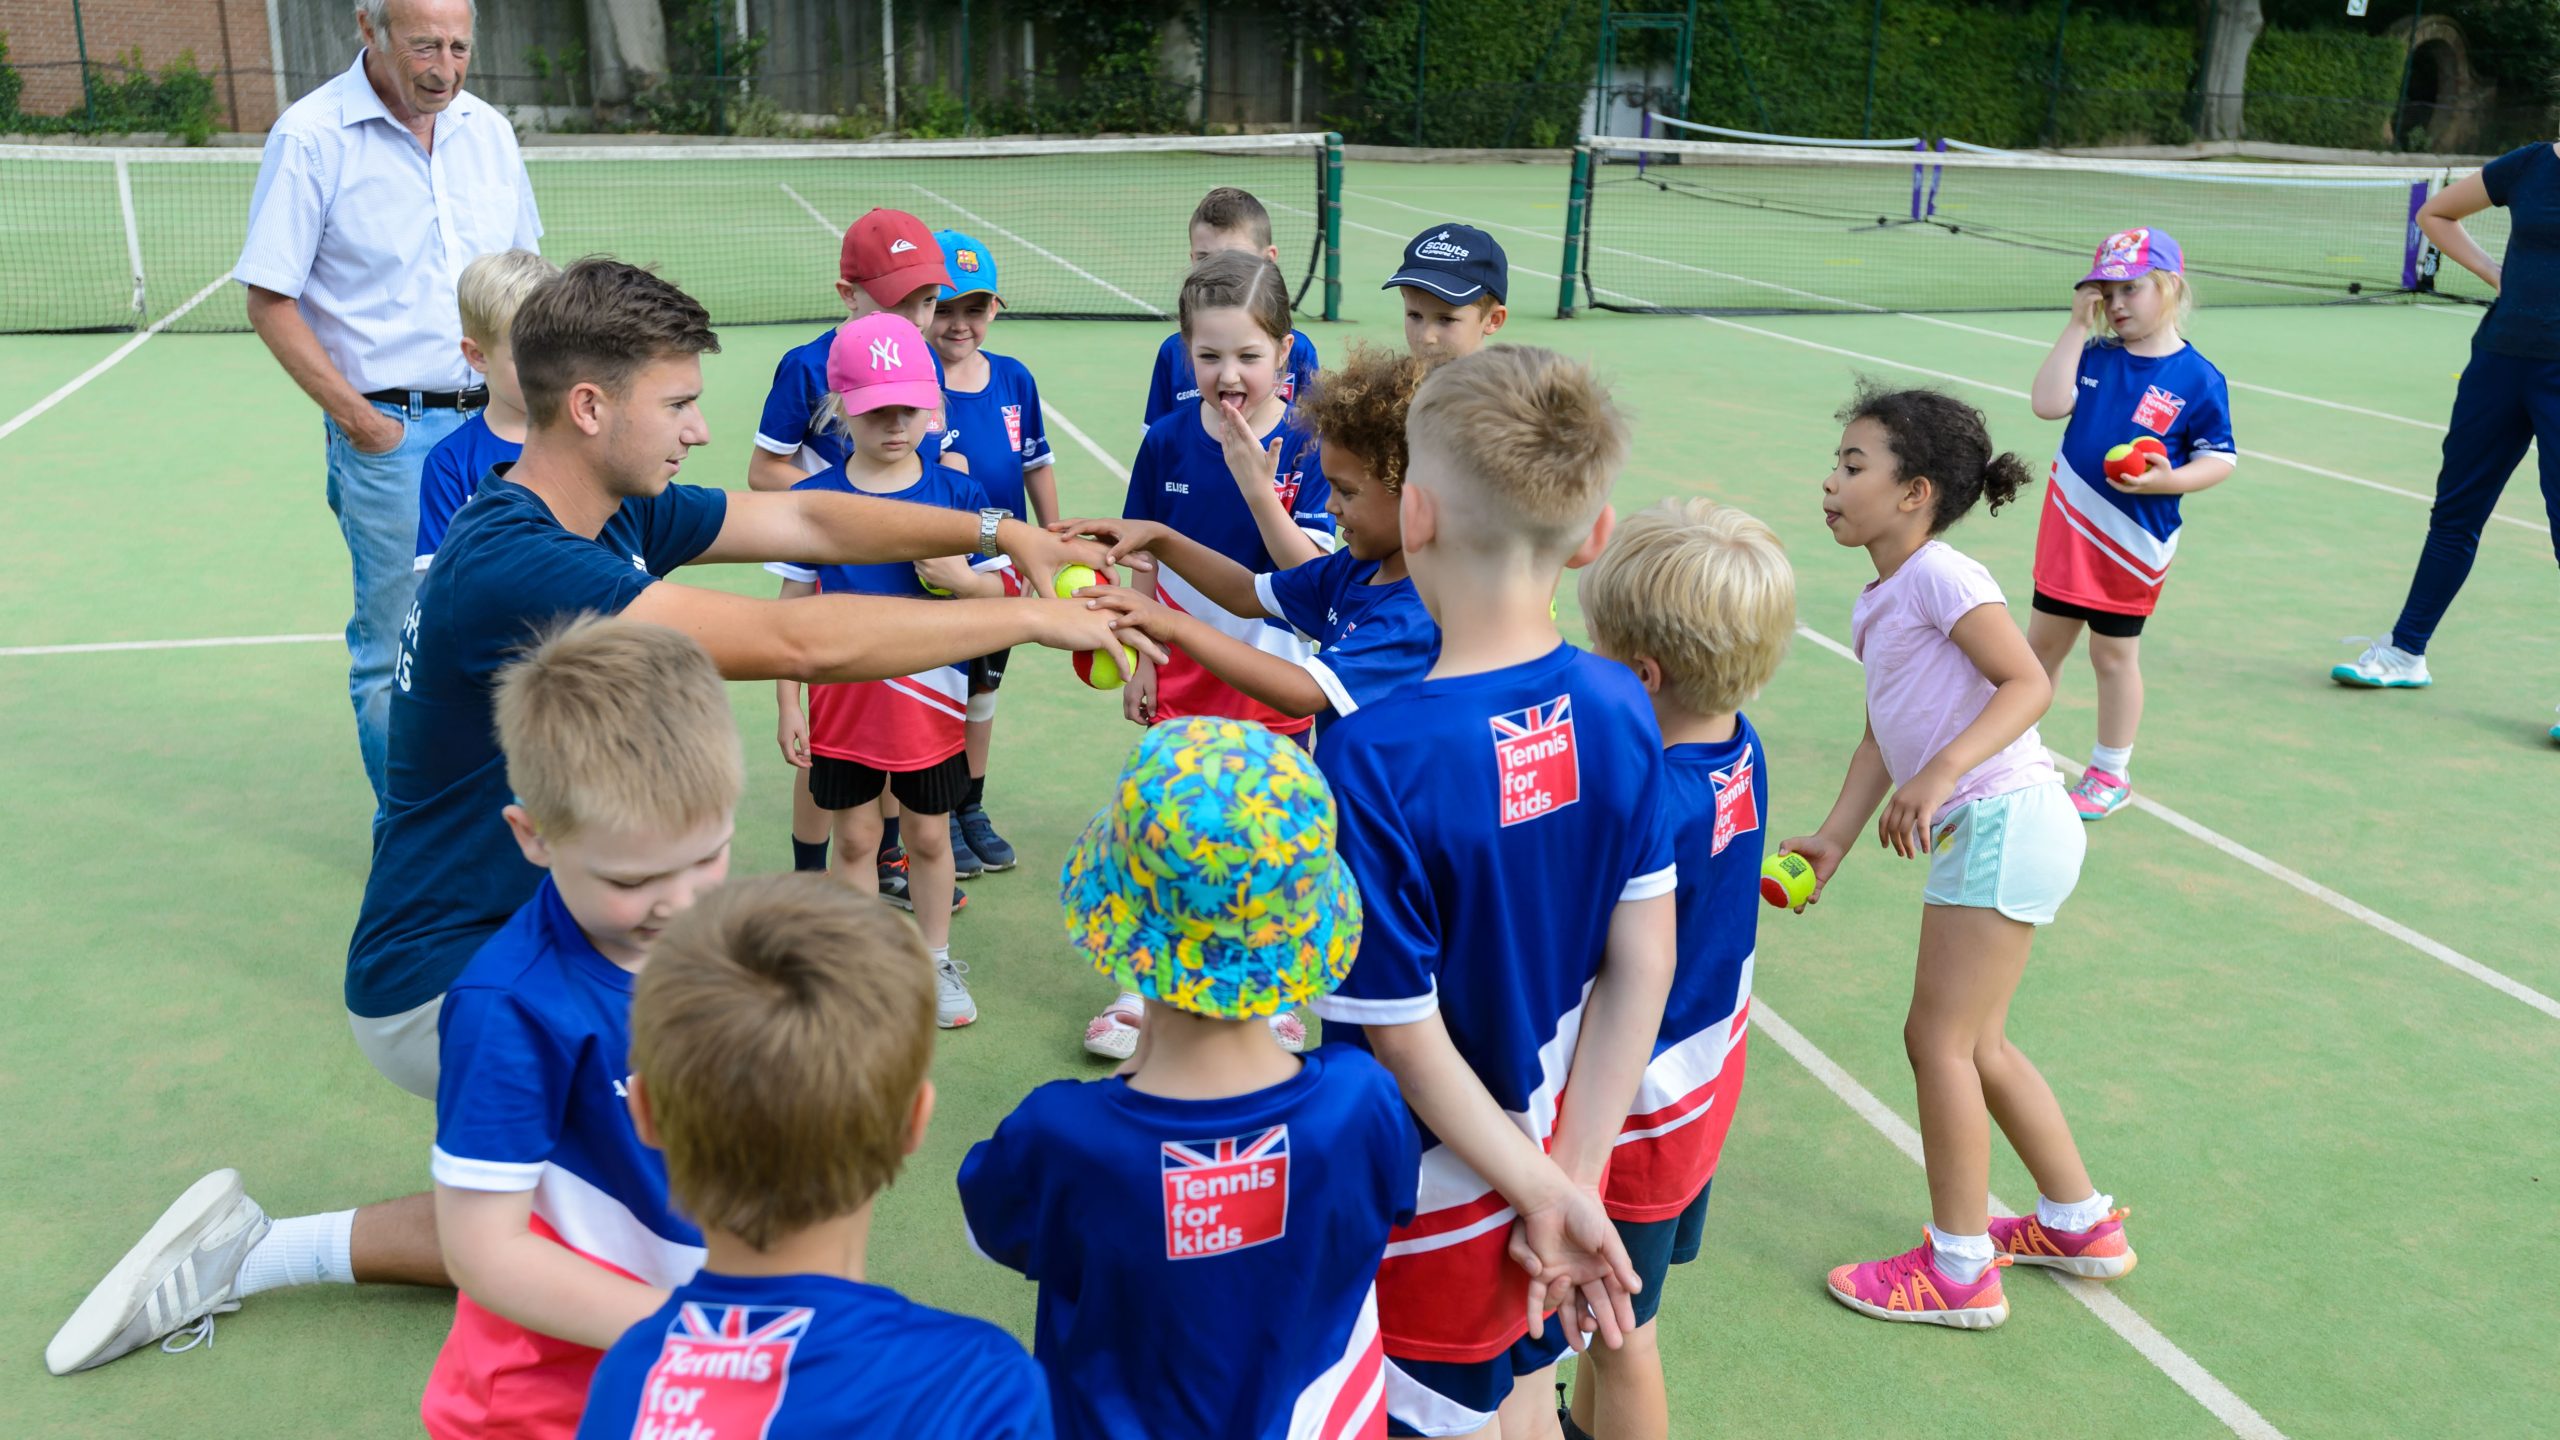 Tennis coach teaching young girls and boys